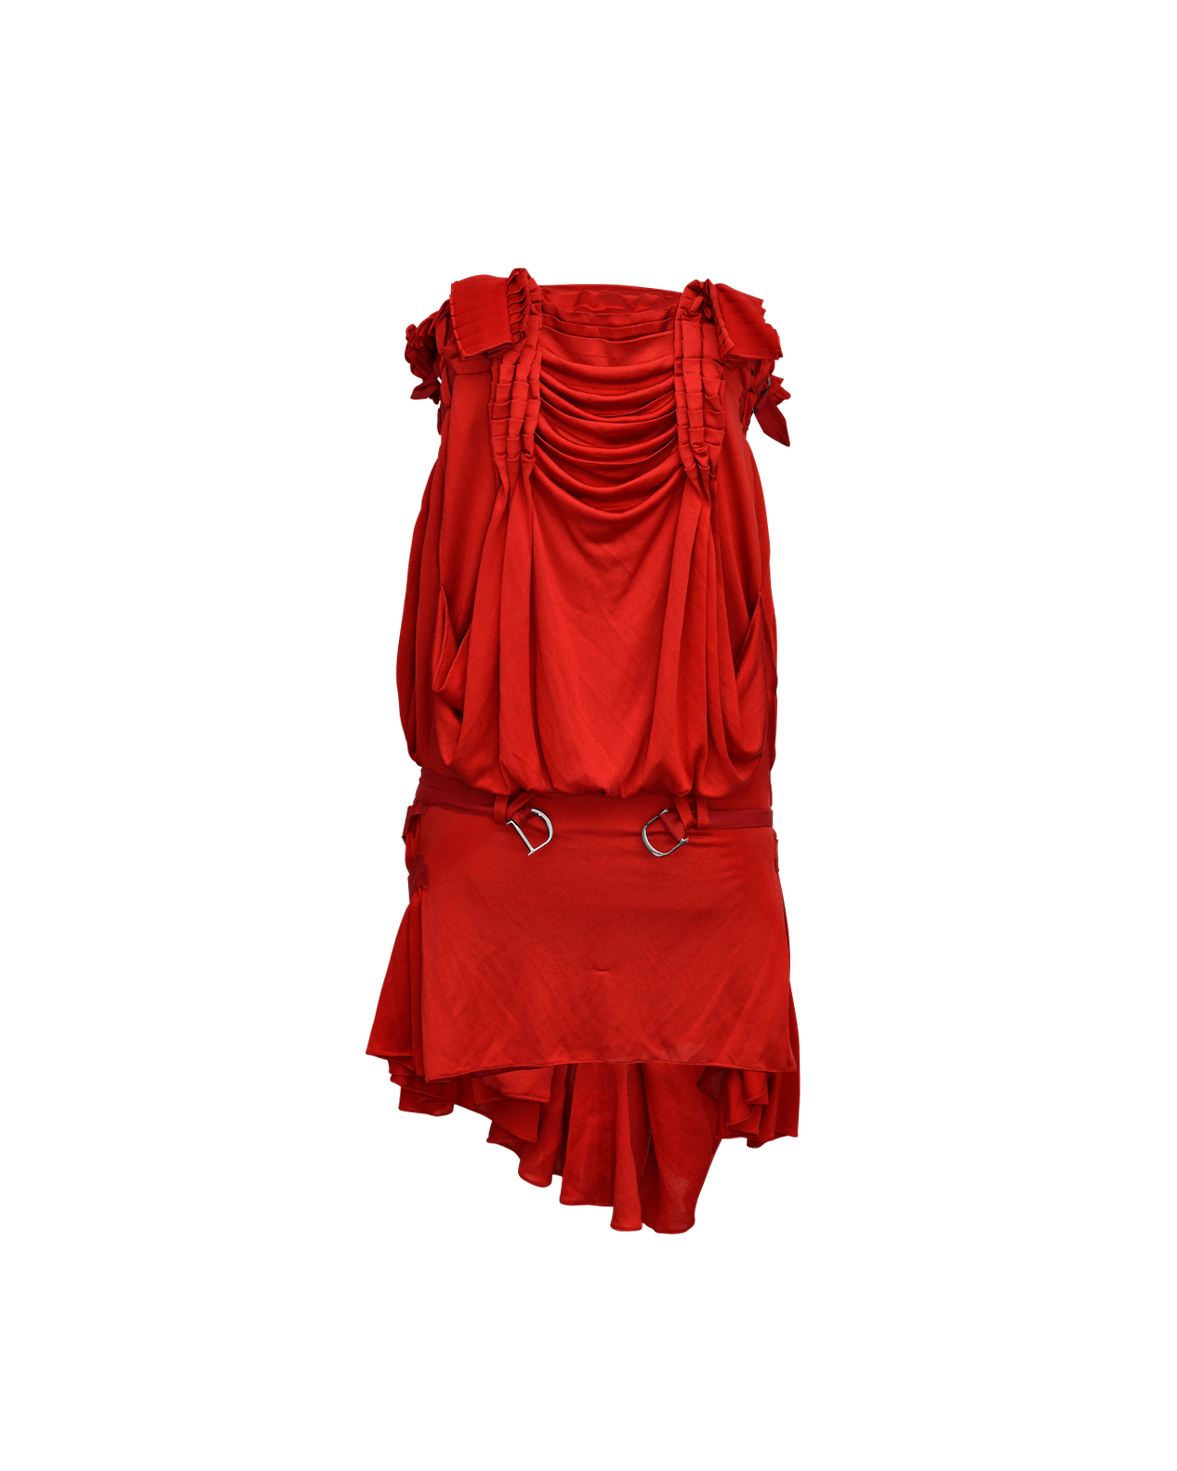 S/S 2003 Red Strapless Mini Dress